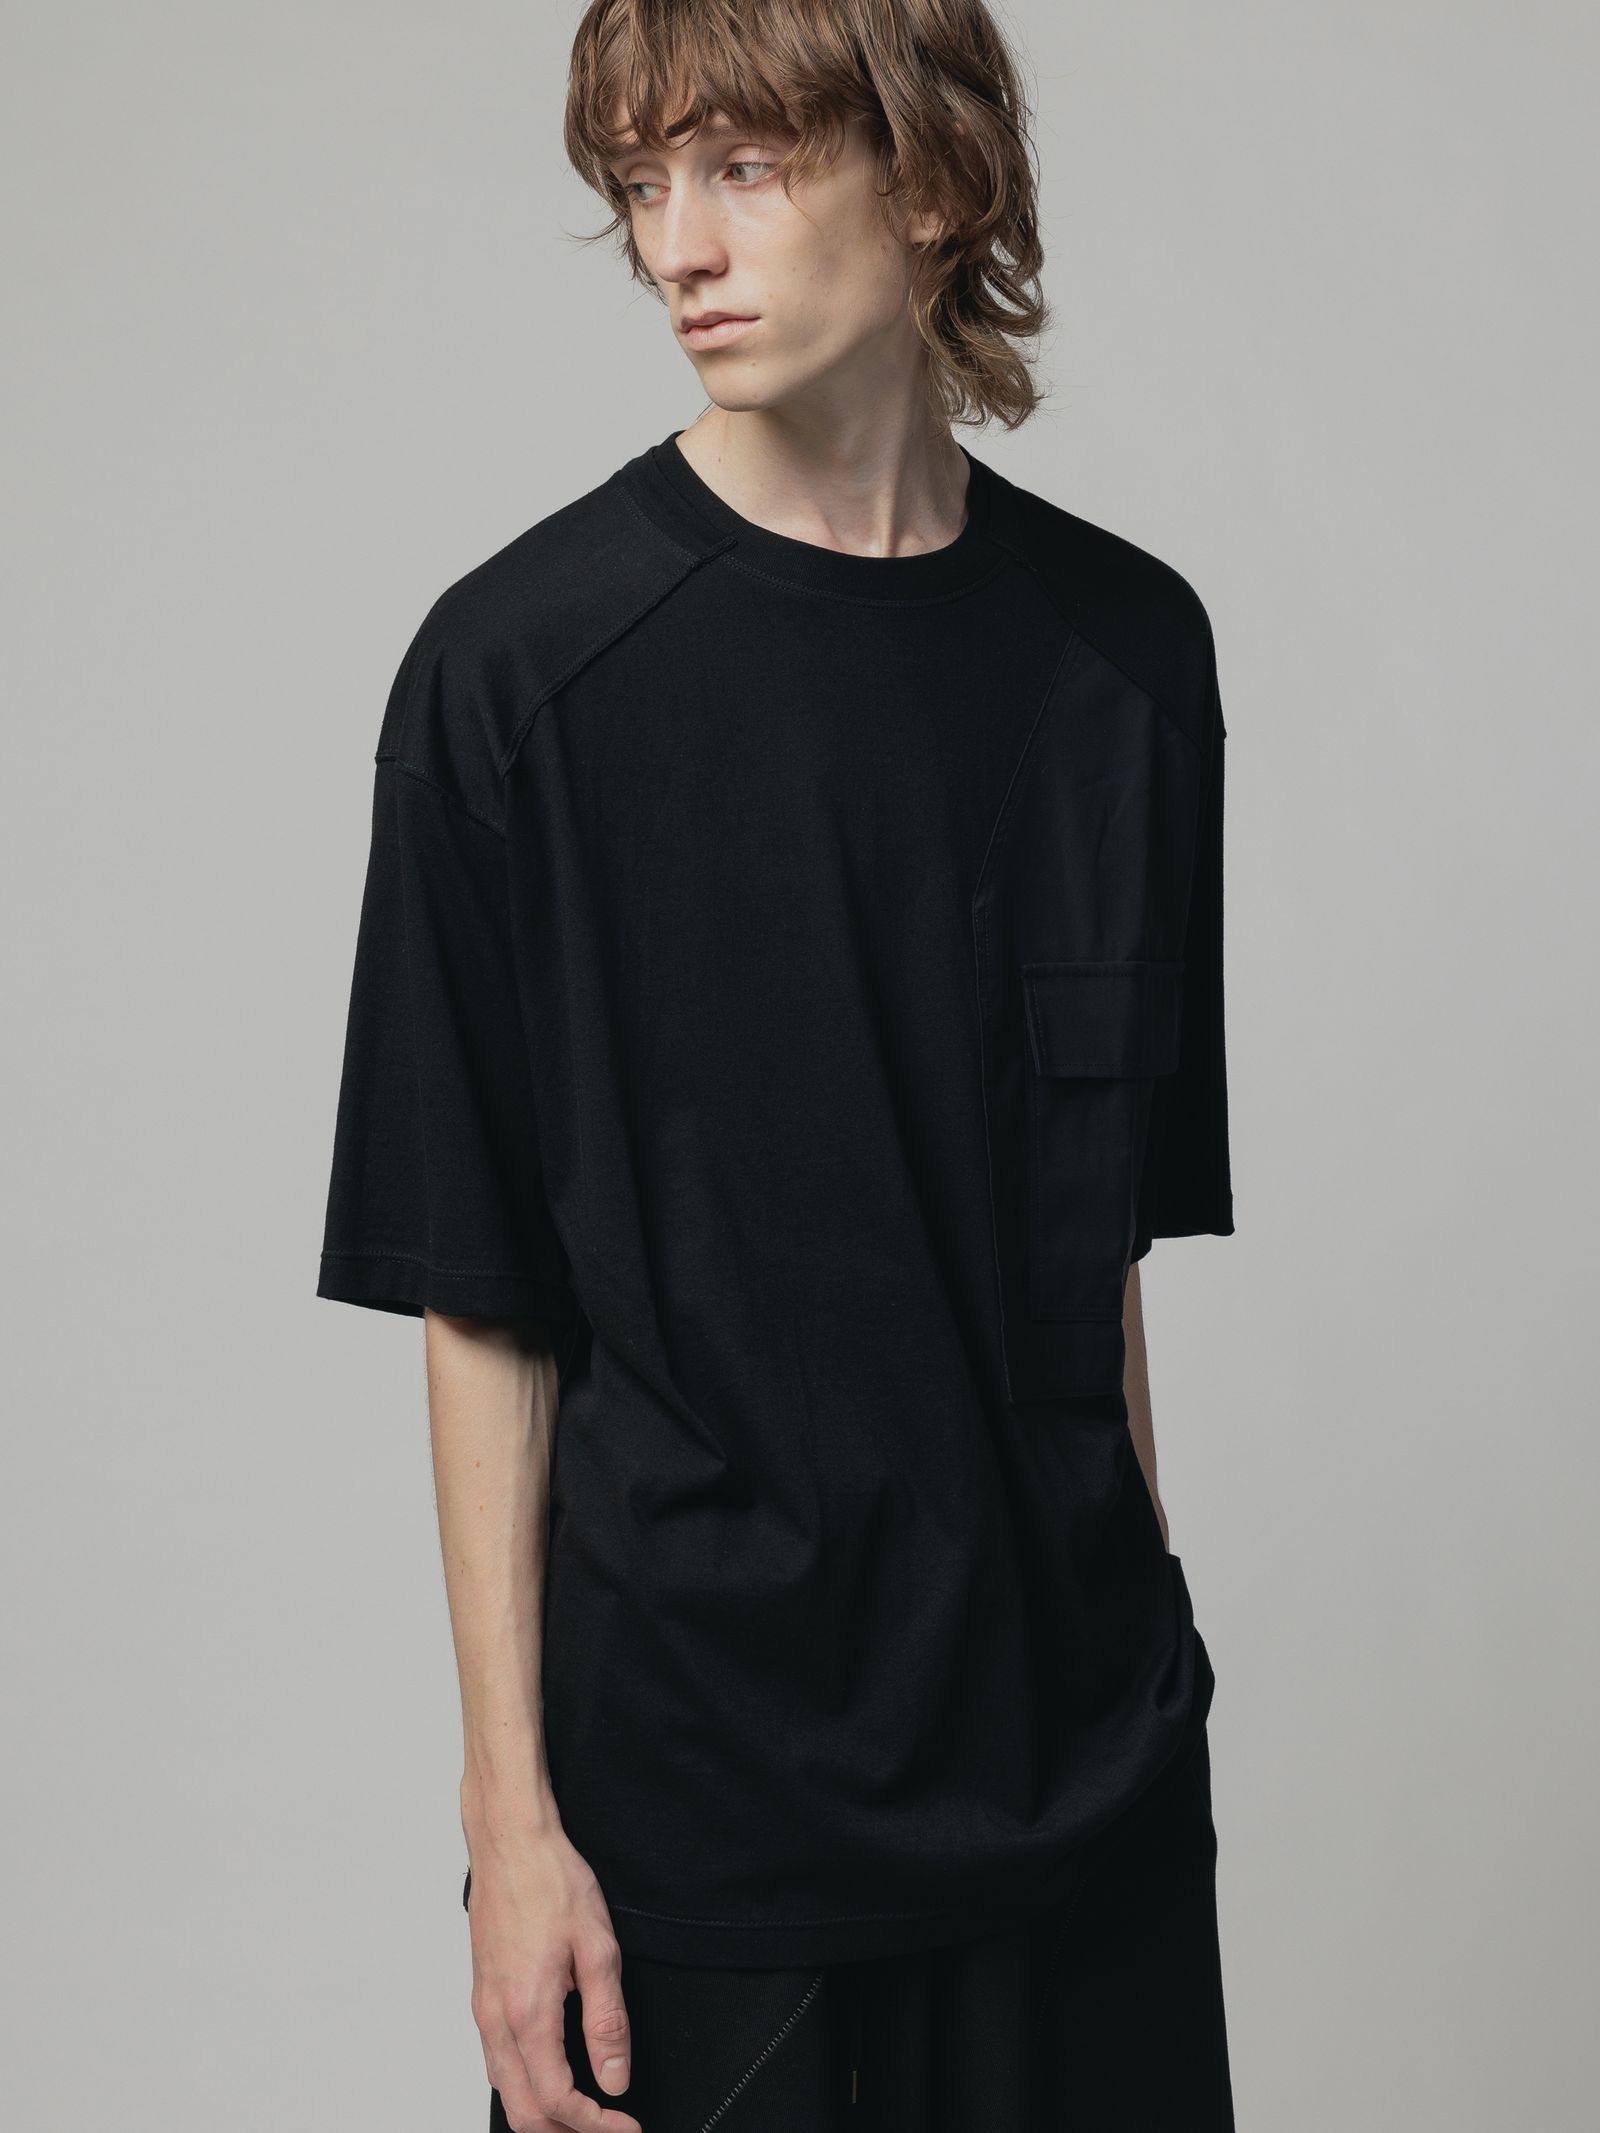 The Viridi-anne - 天竺 ポケット - Tcotton jersey pocket t-shirt - BLACK